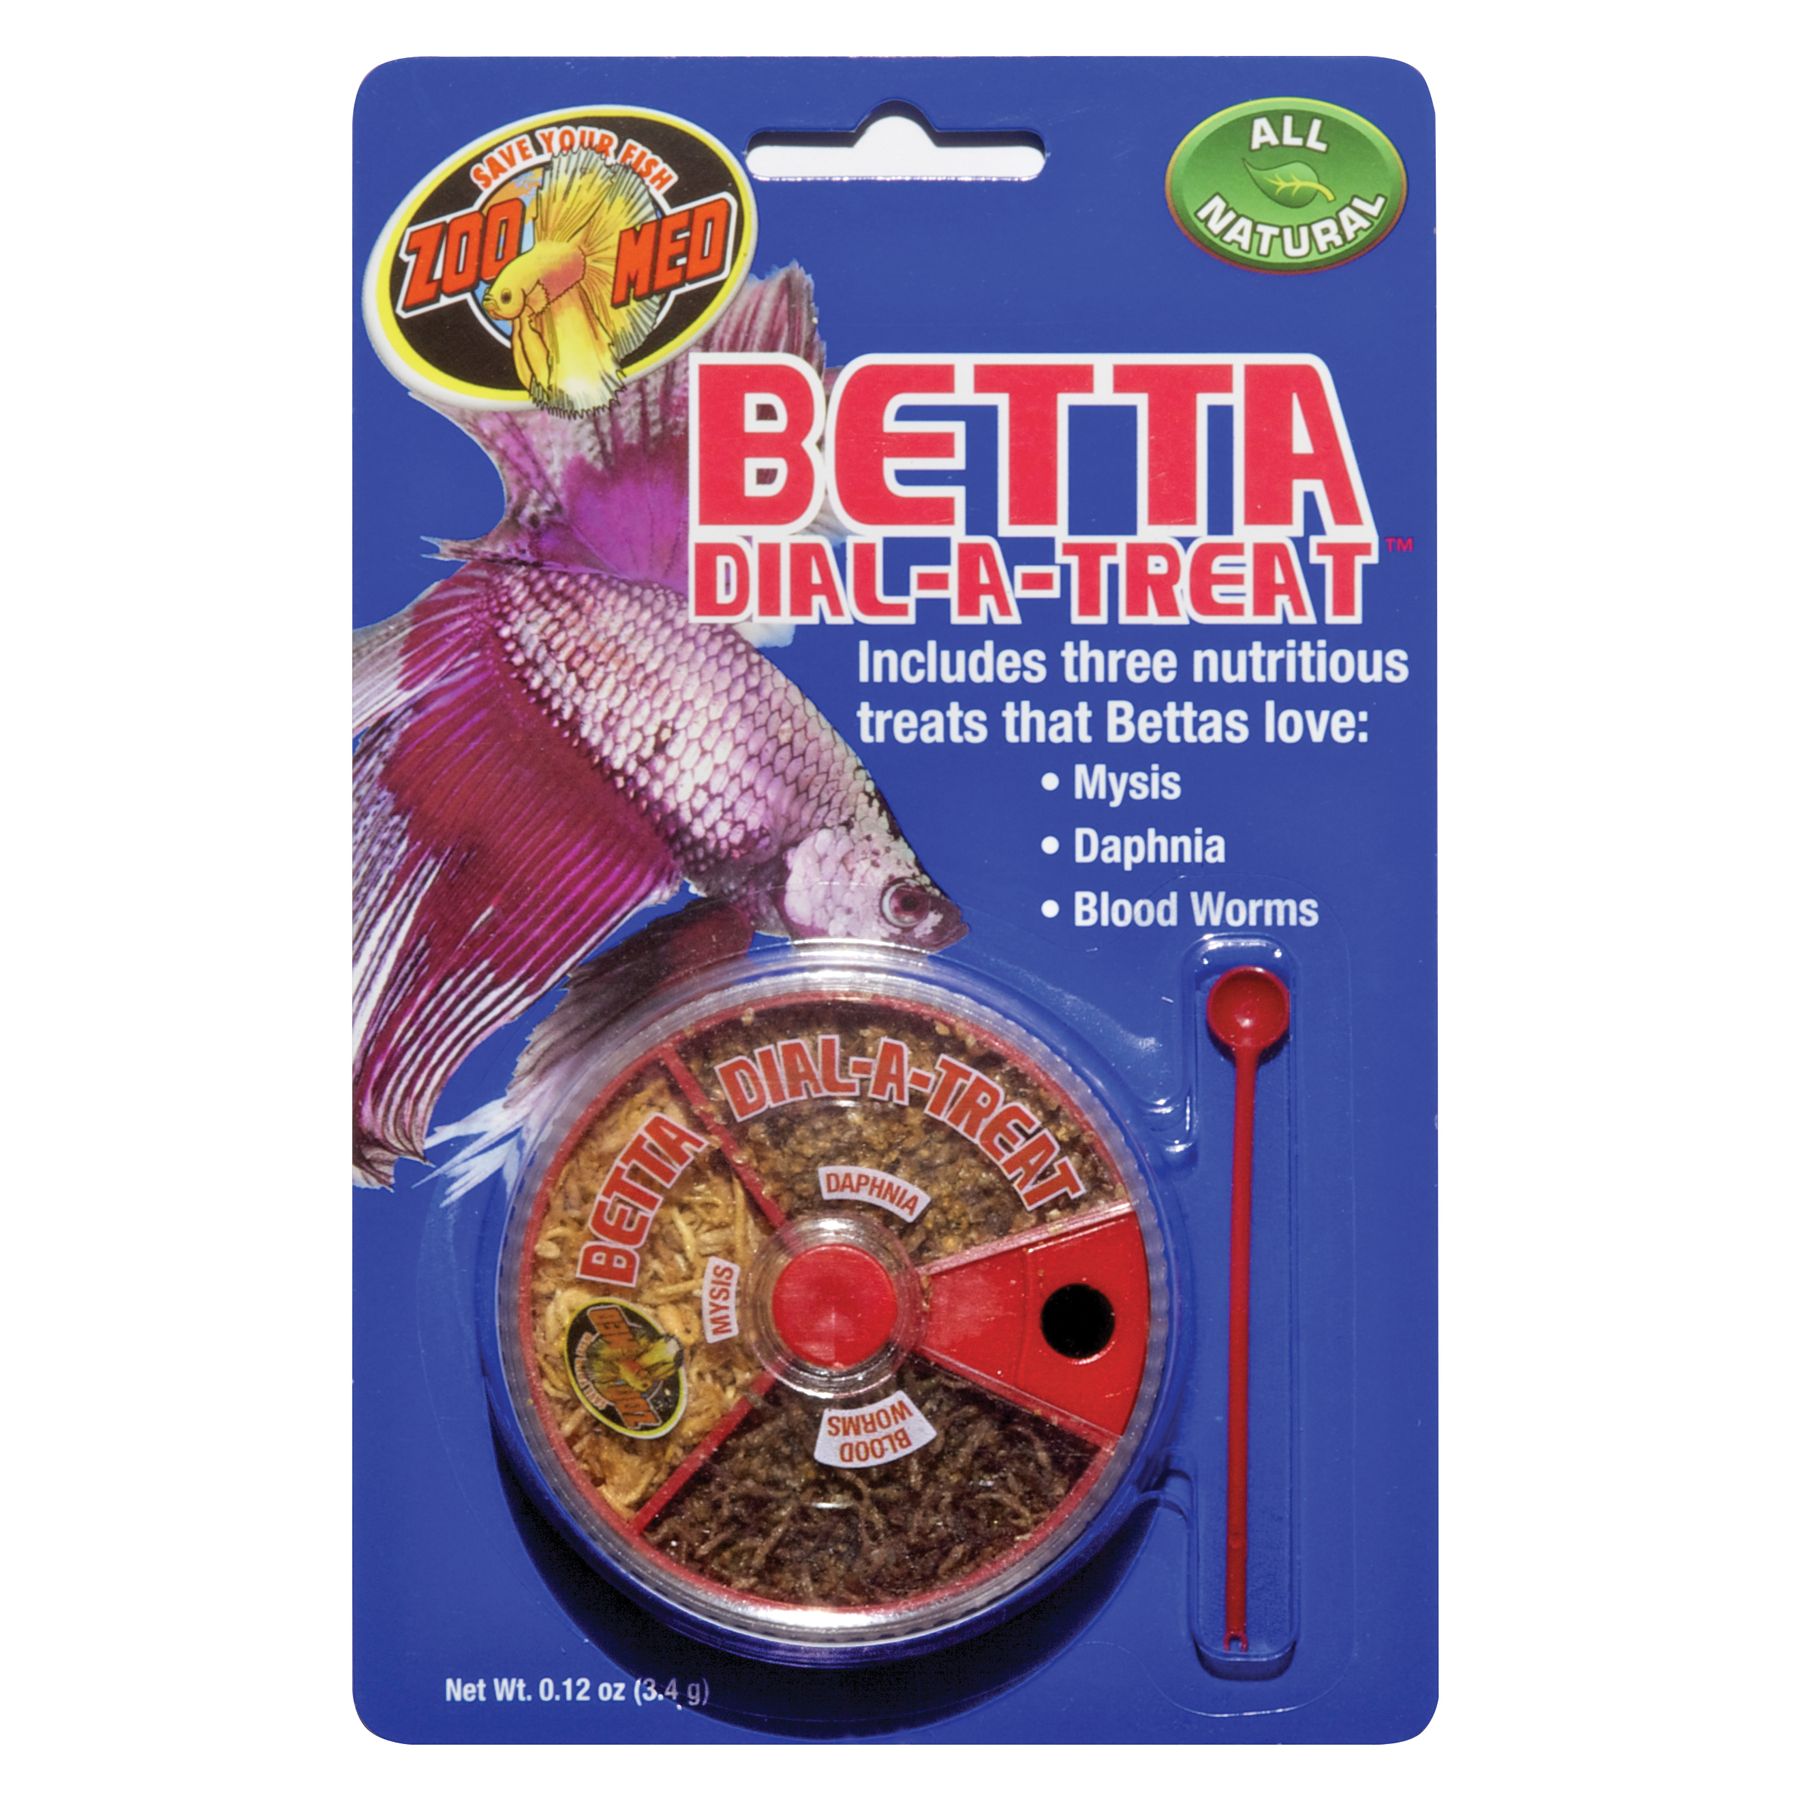 betta vacation feeder